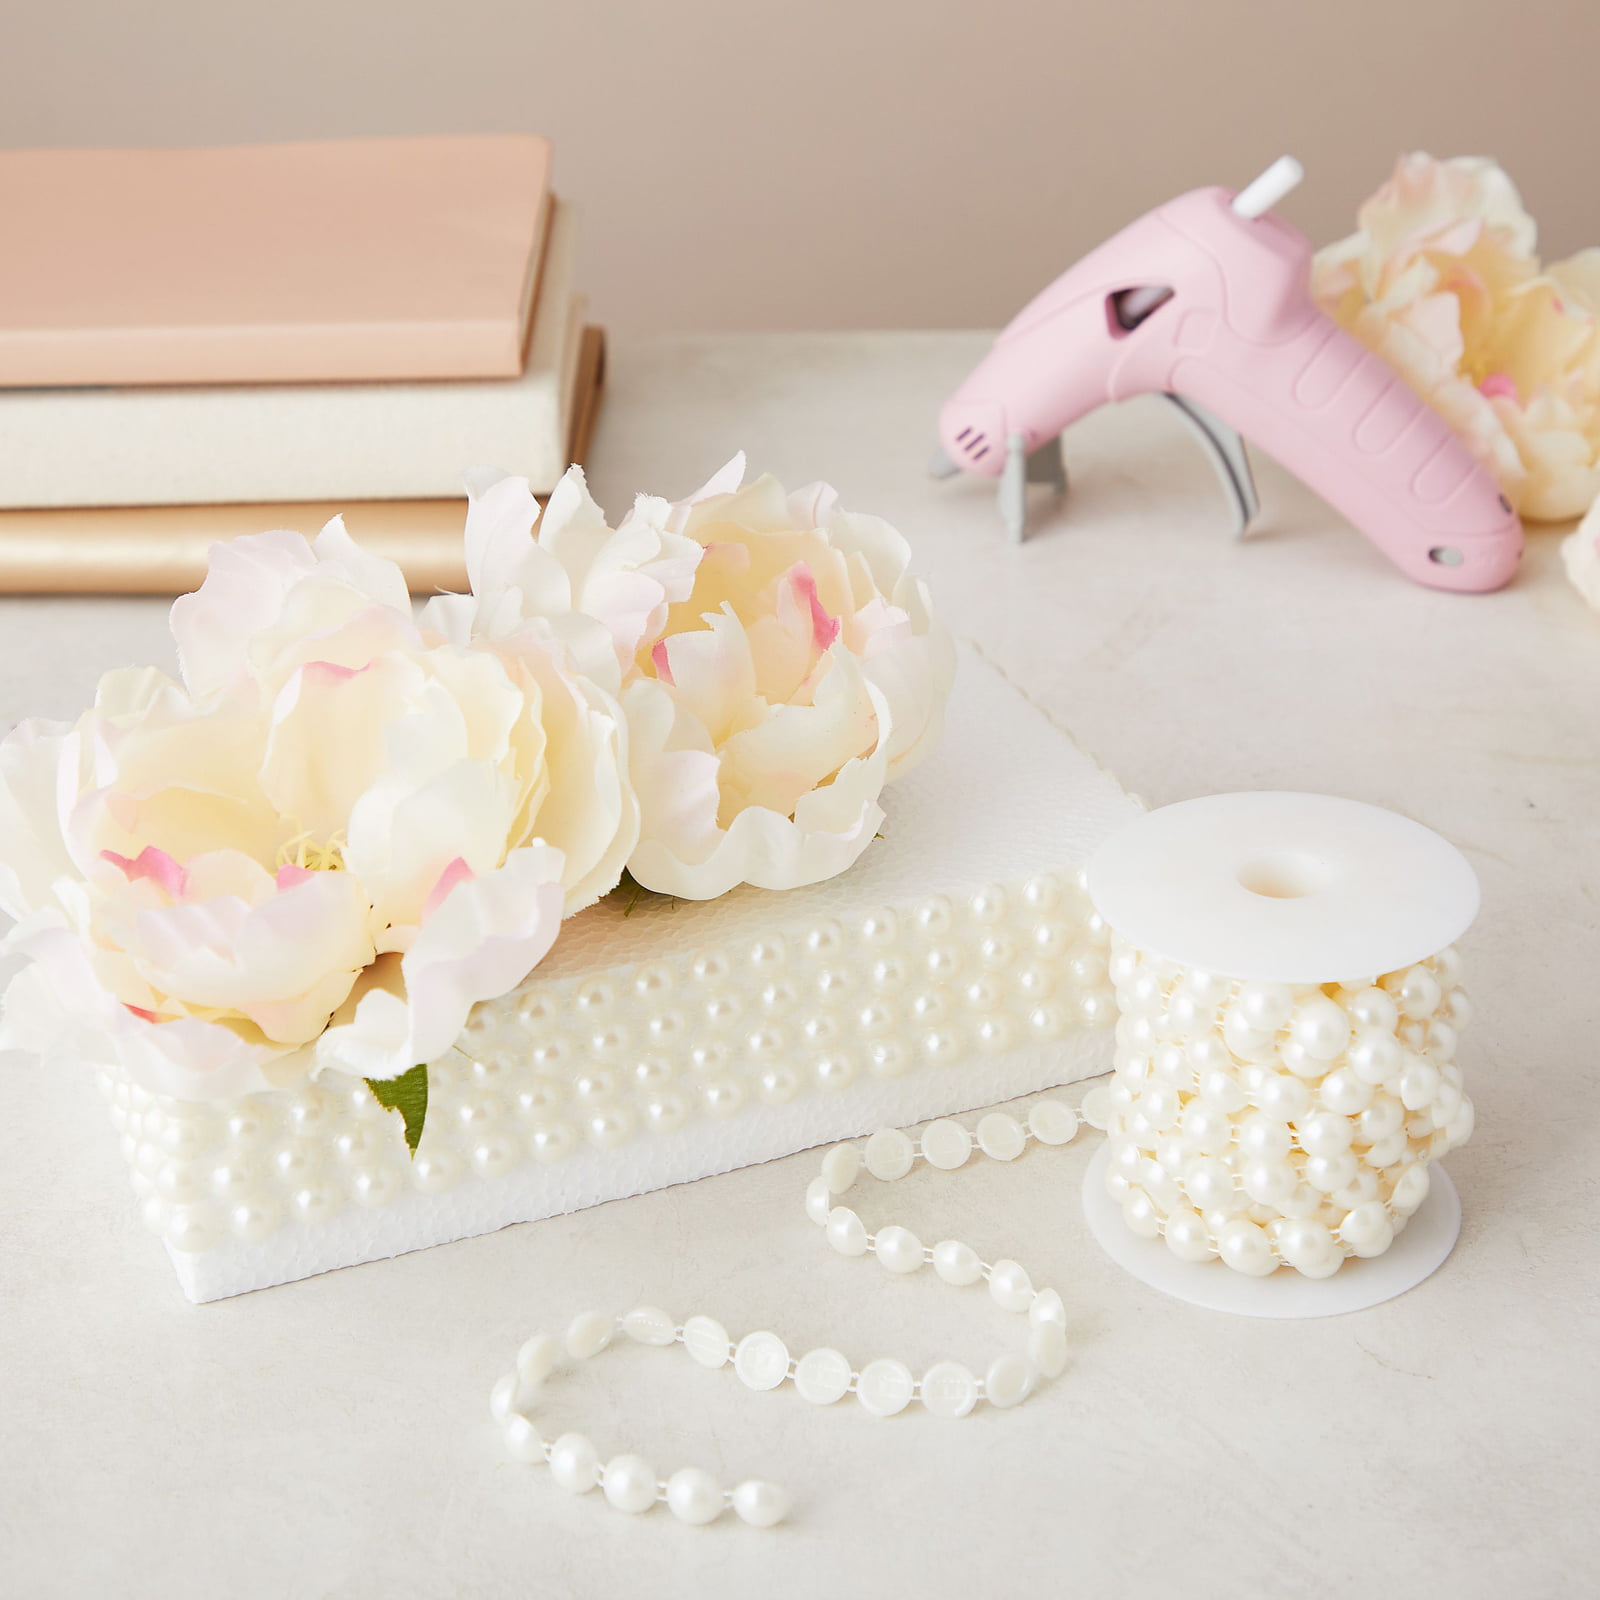 White Teardrop Pearls String Beads Garland Sewing Trim Craft Wedding Crafts